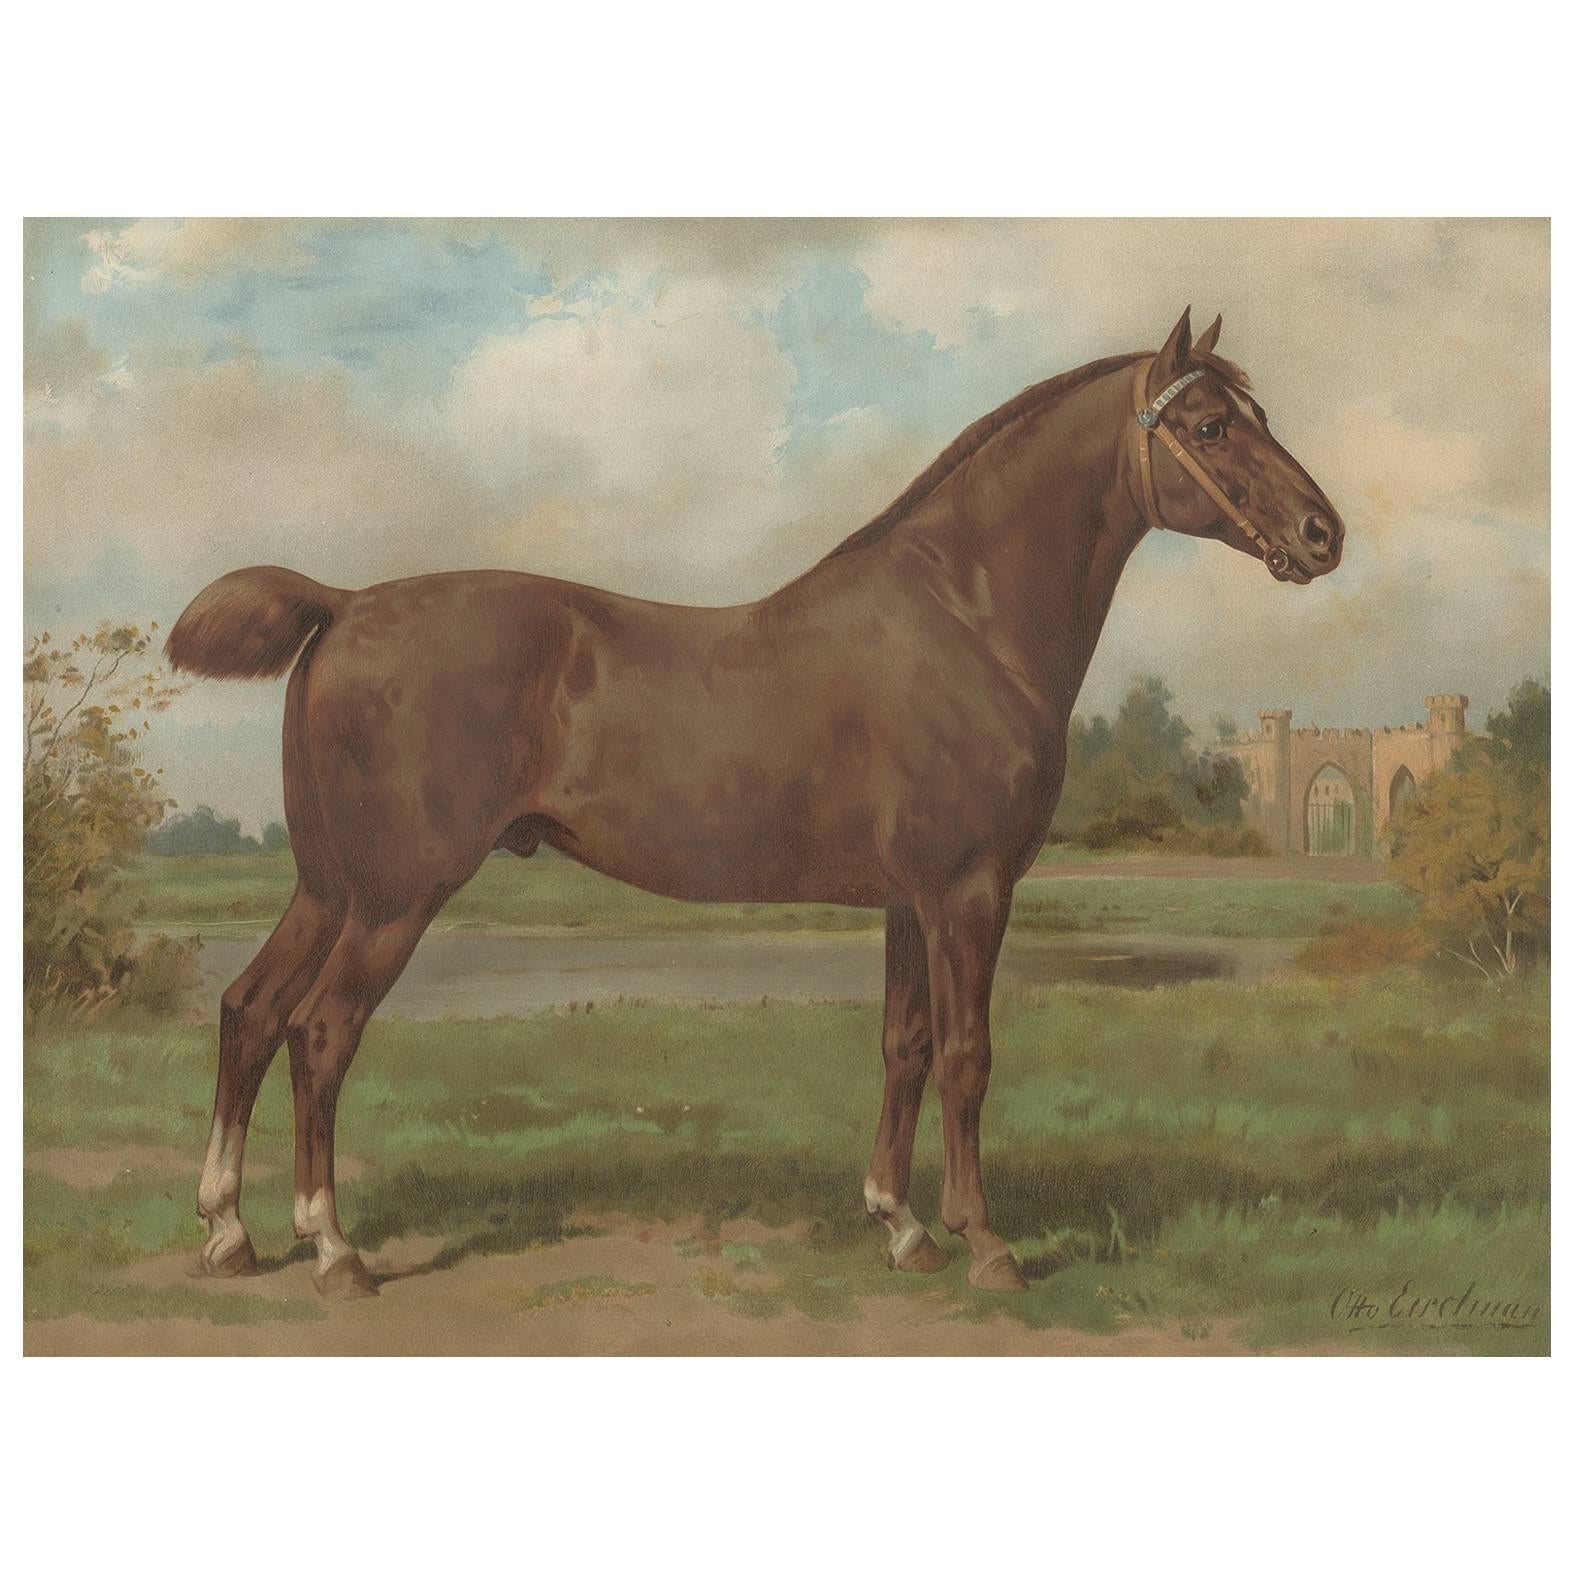 Antique Print of the Hackney Horse by O. Eerelman, 1898